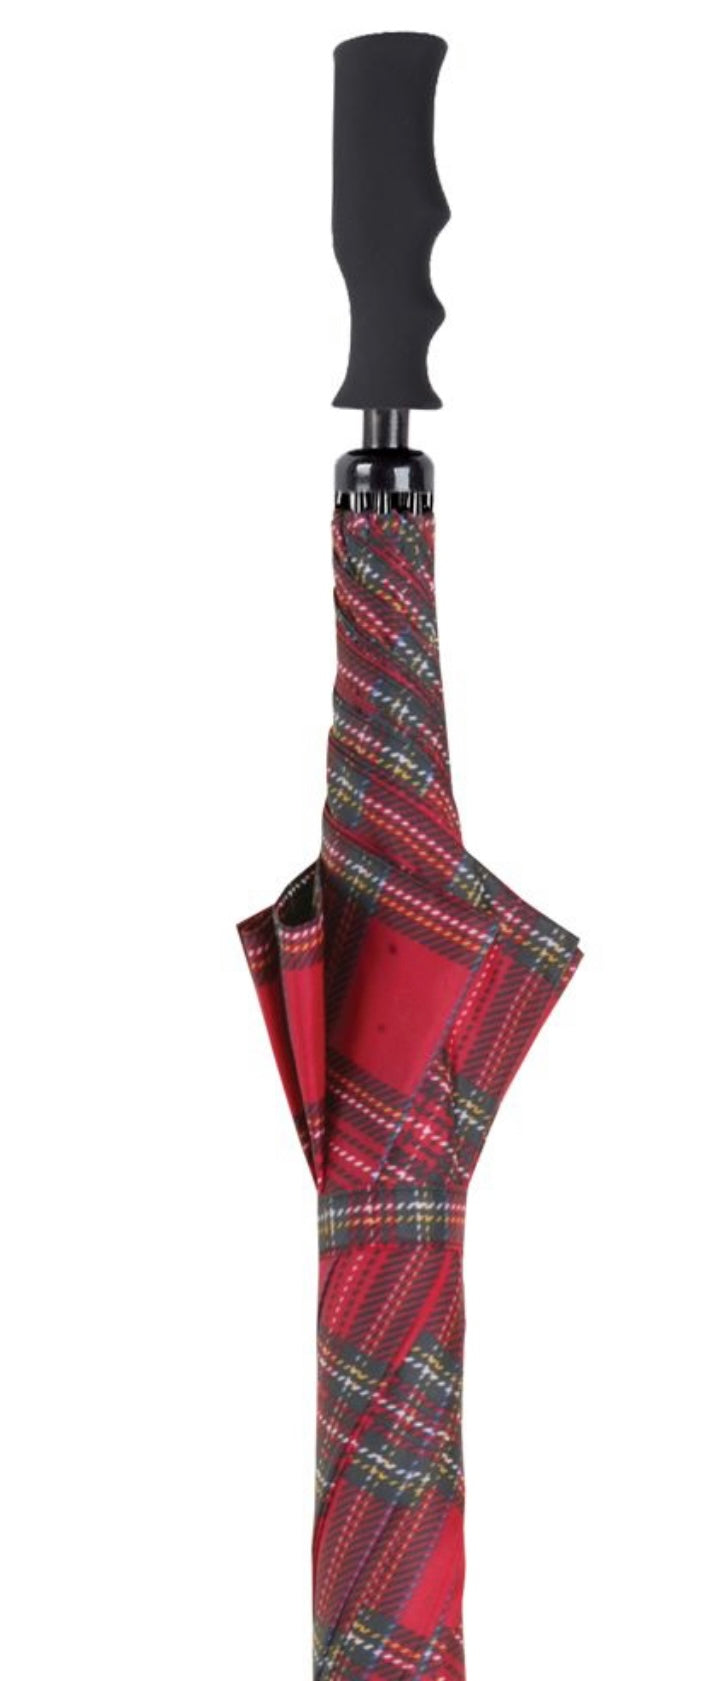 Red Tartan Golf Umbrella